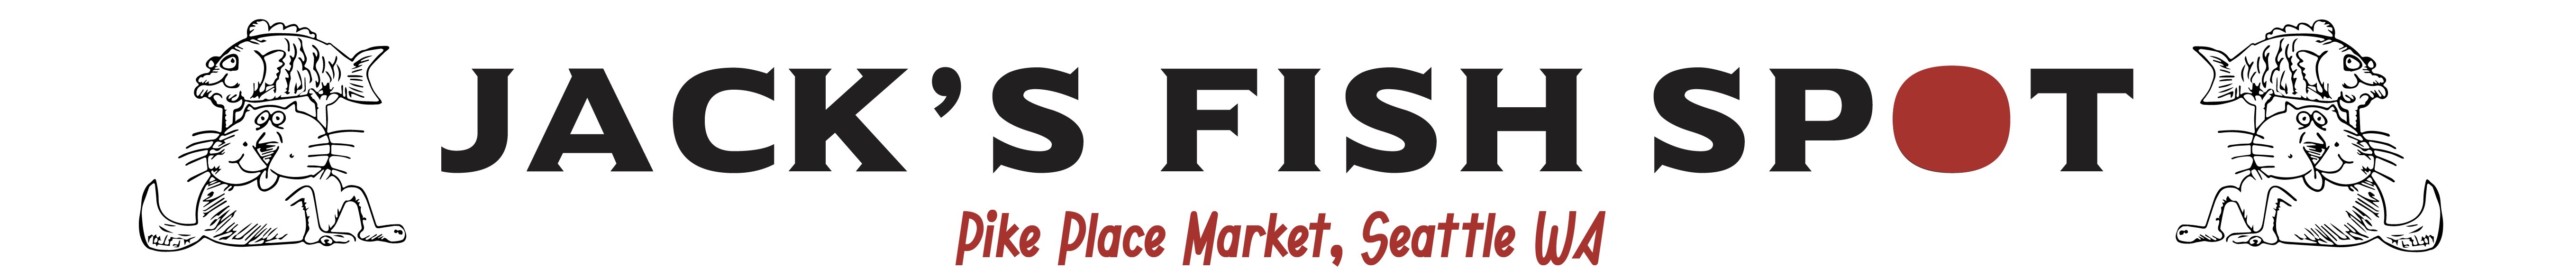 Jack's Fish Spot Logo